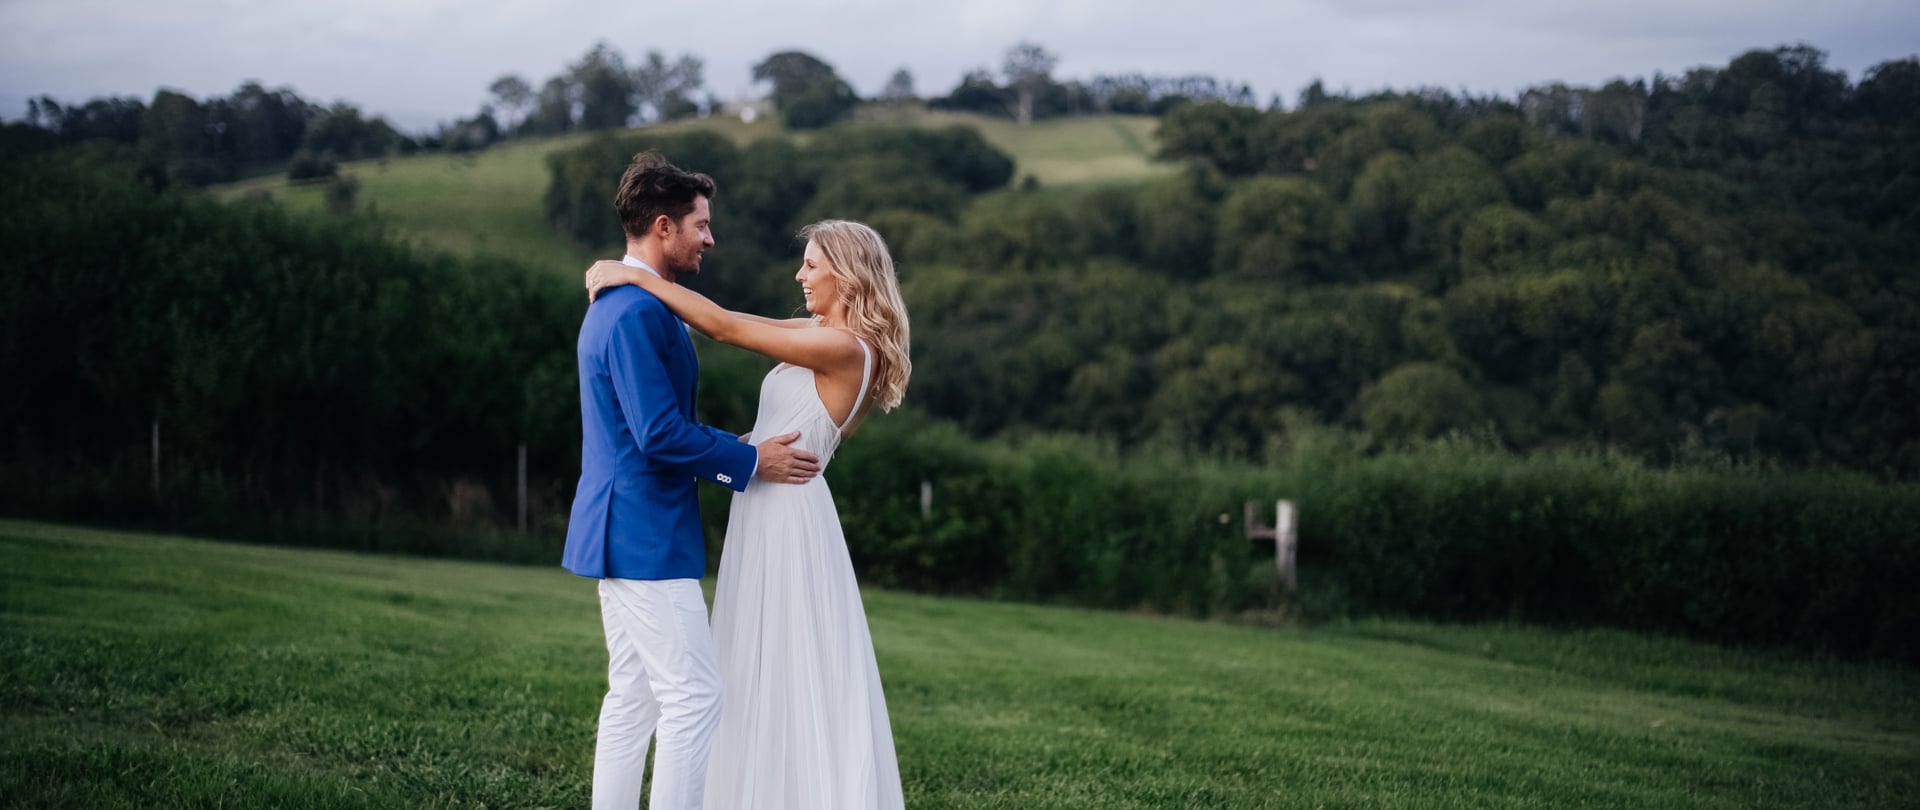 Eliza & Luke Wedding Video Filmed at Byron Bay, New South Wales